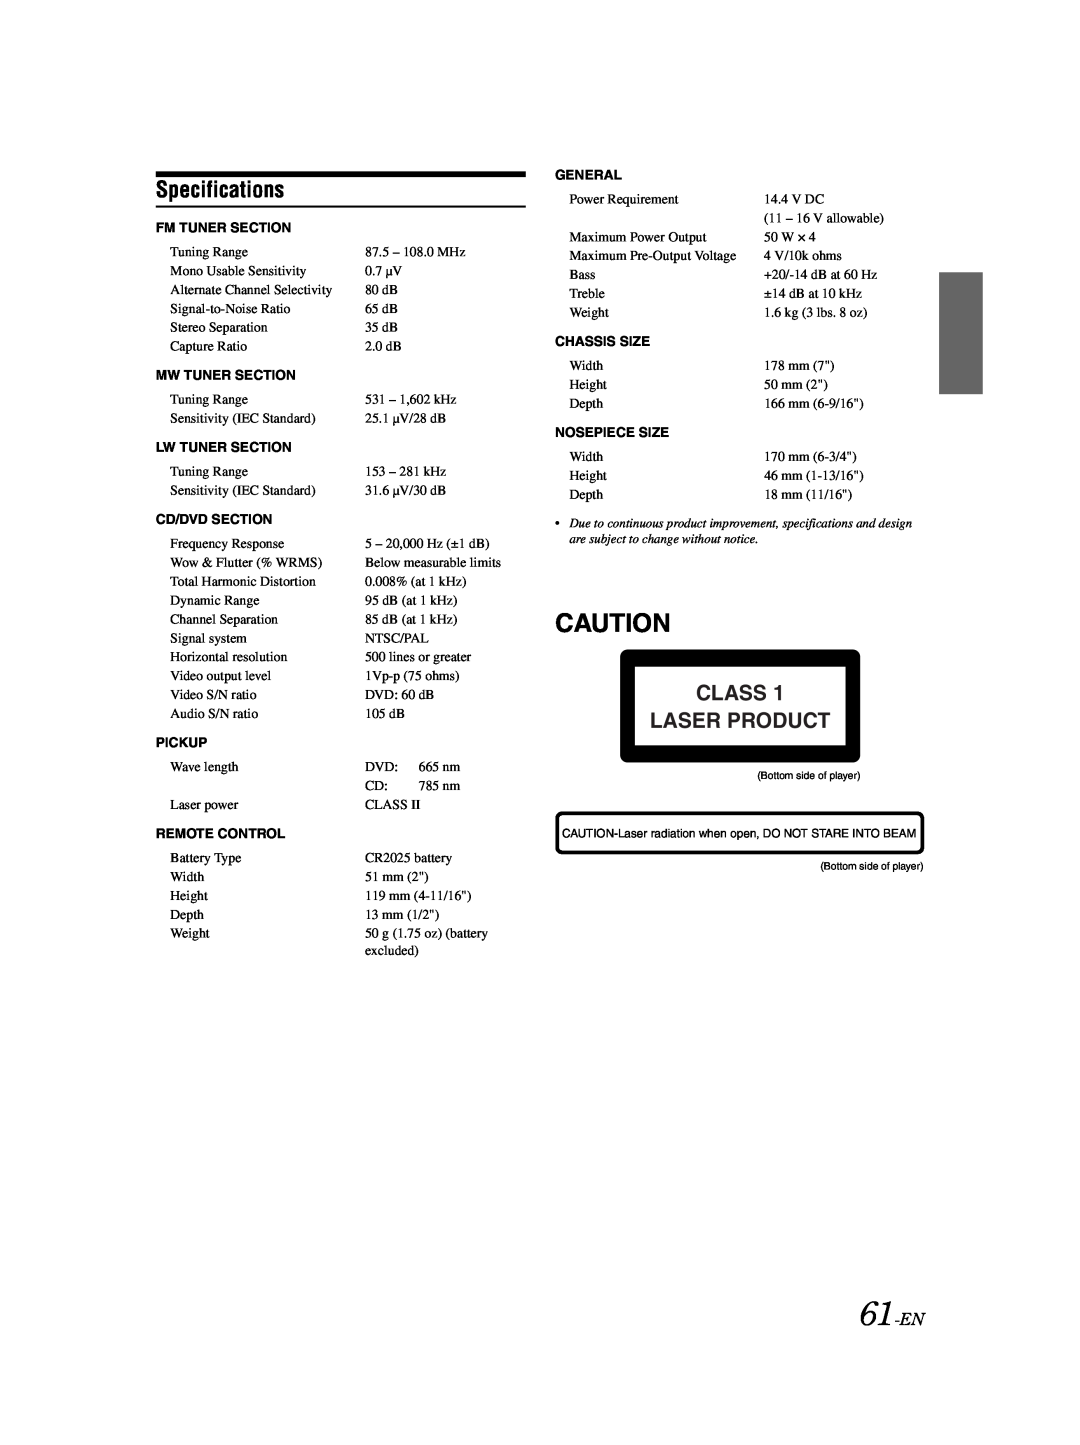 Alpine DVA-9861Ri owner manual Specifications, Class Laser Product, 61-EN 